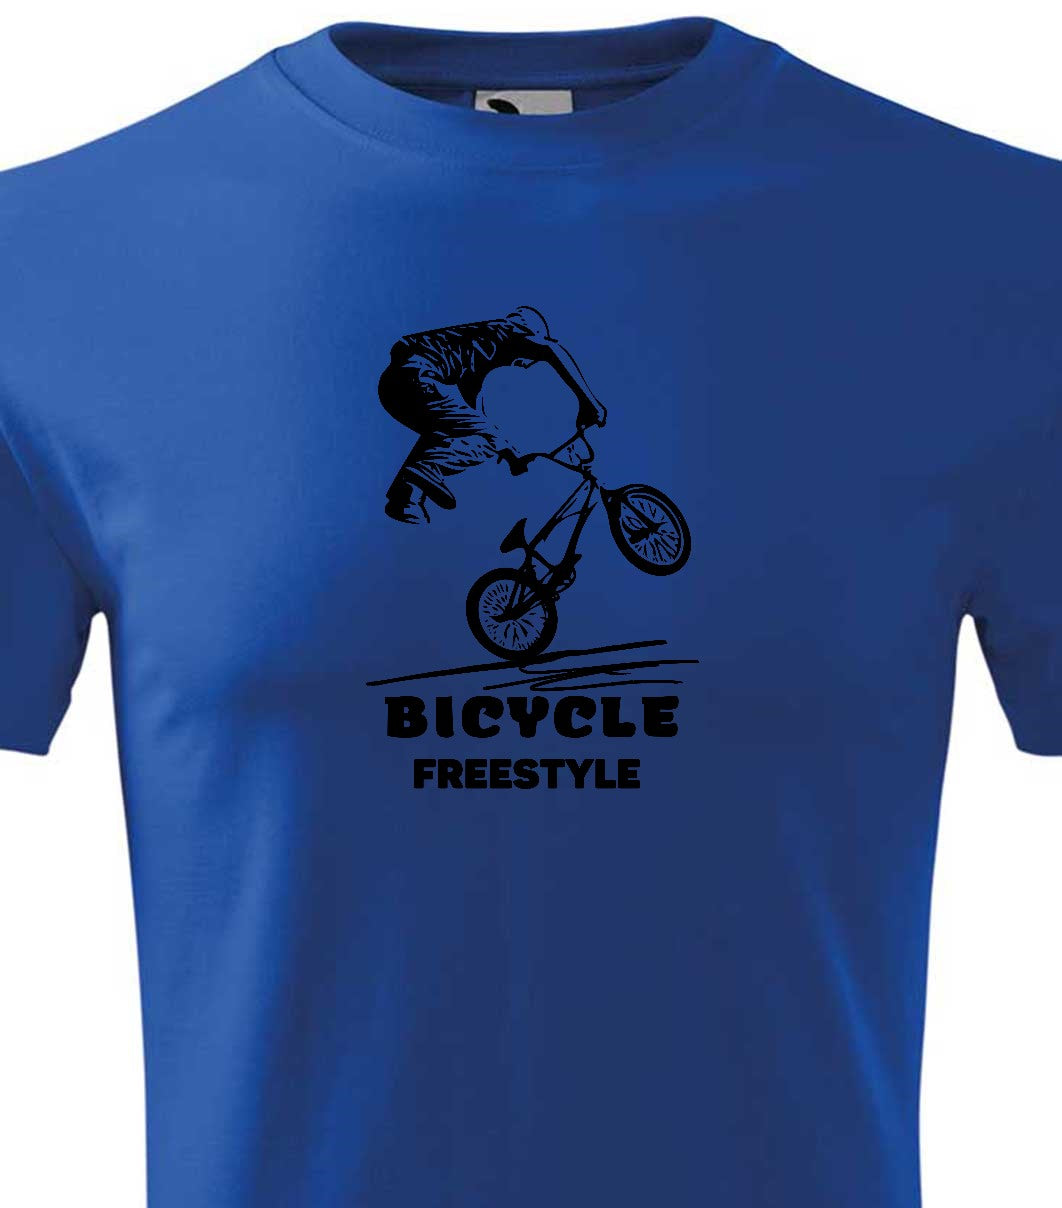 Bicycle freestyle gyerek technikai póló